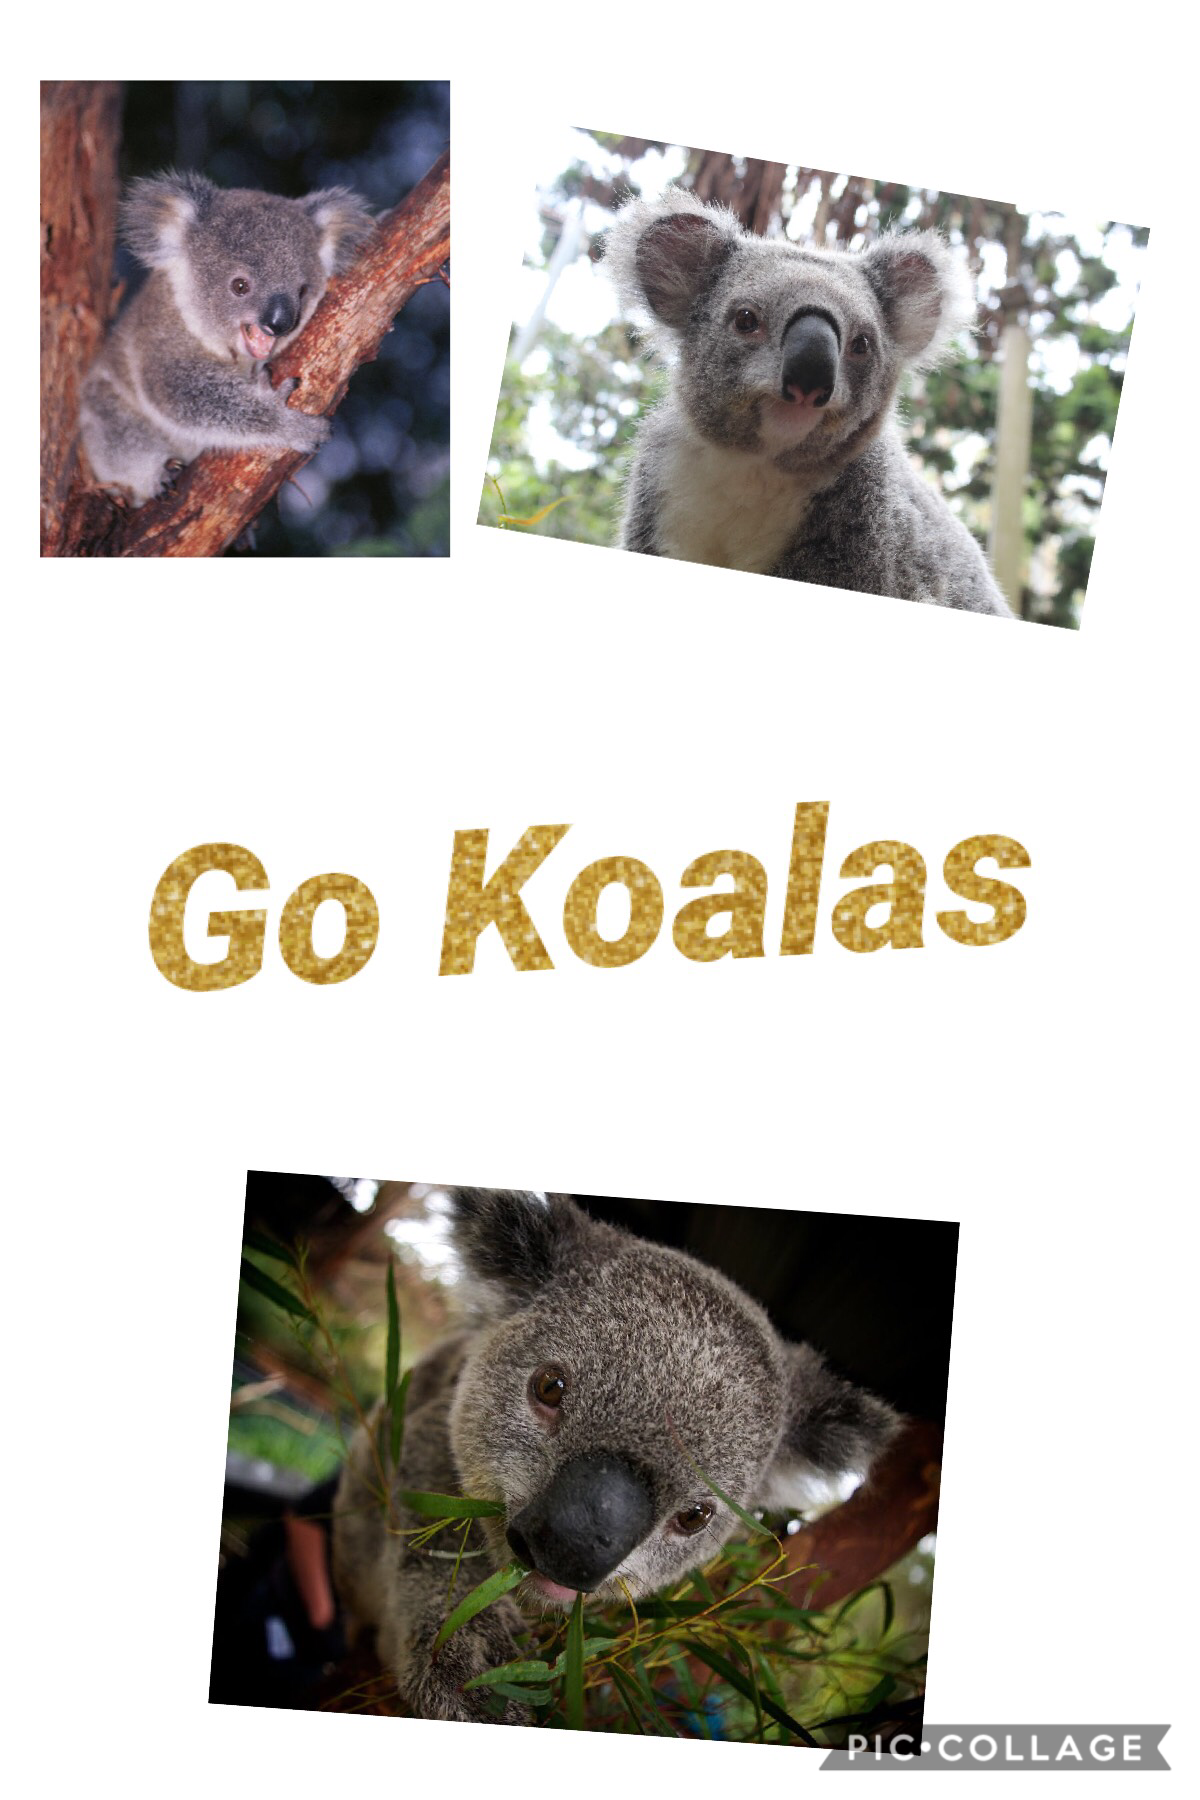 Go koalas